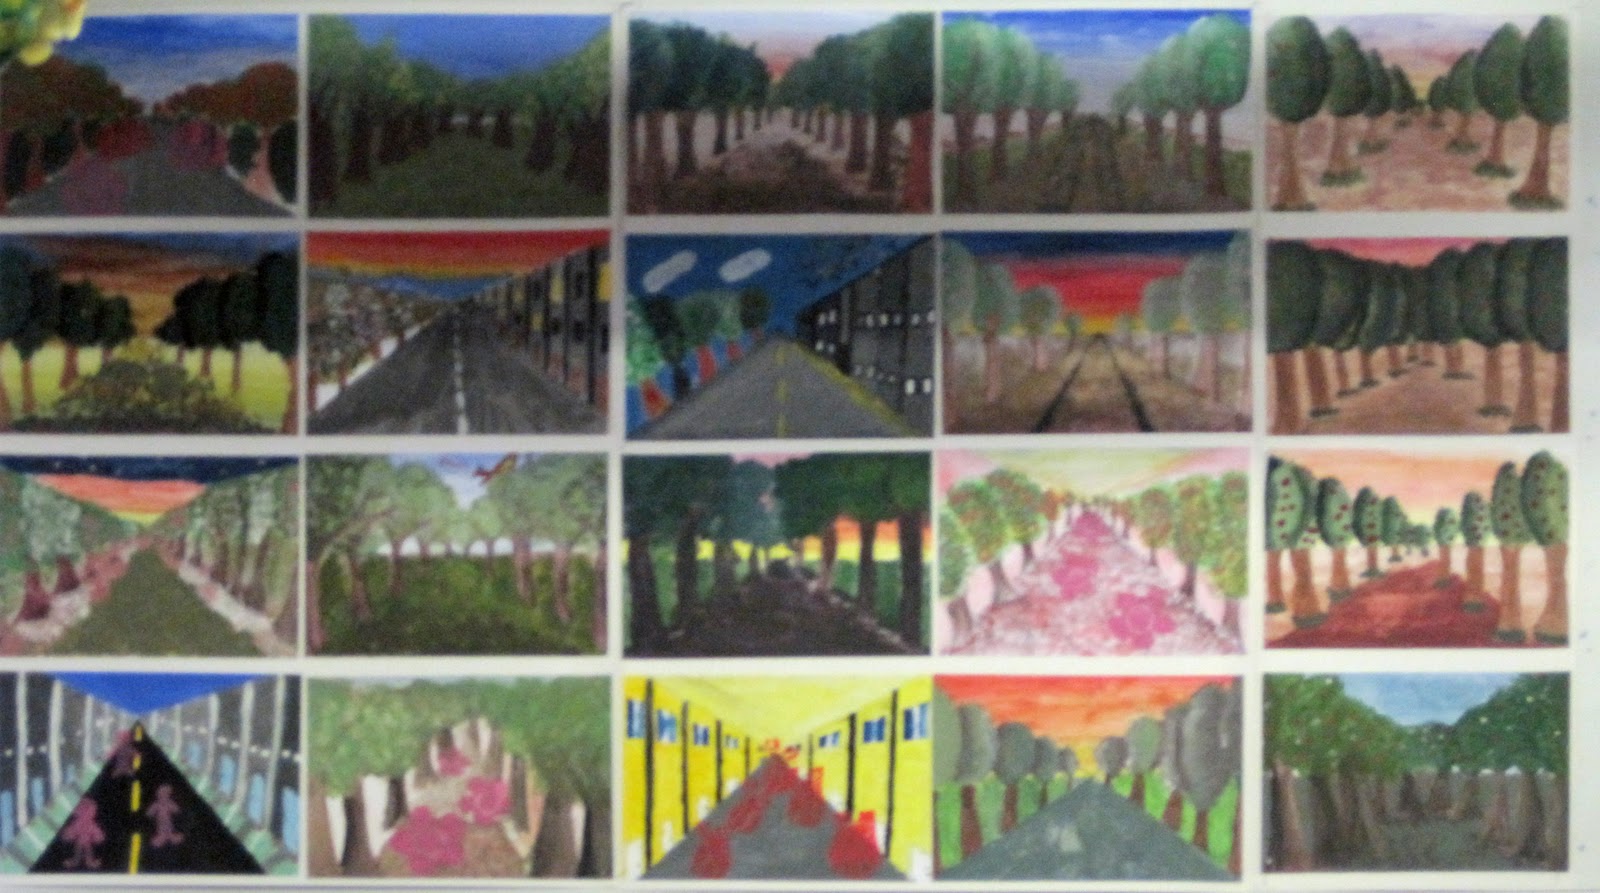 Bulmershe School Art Department Blog: Analysing an artwork